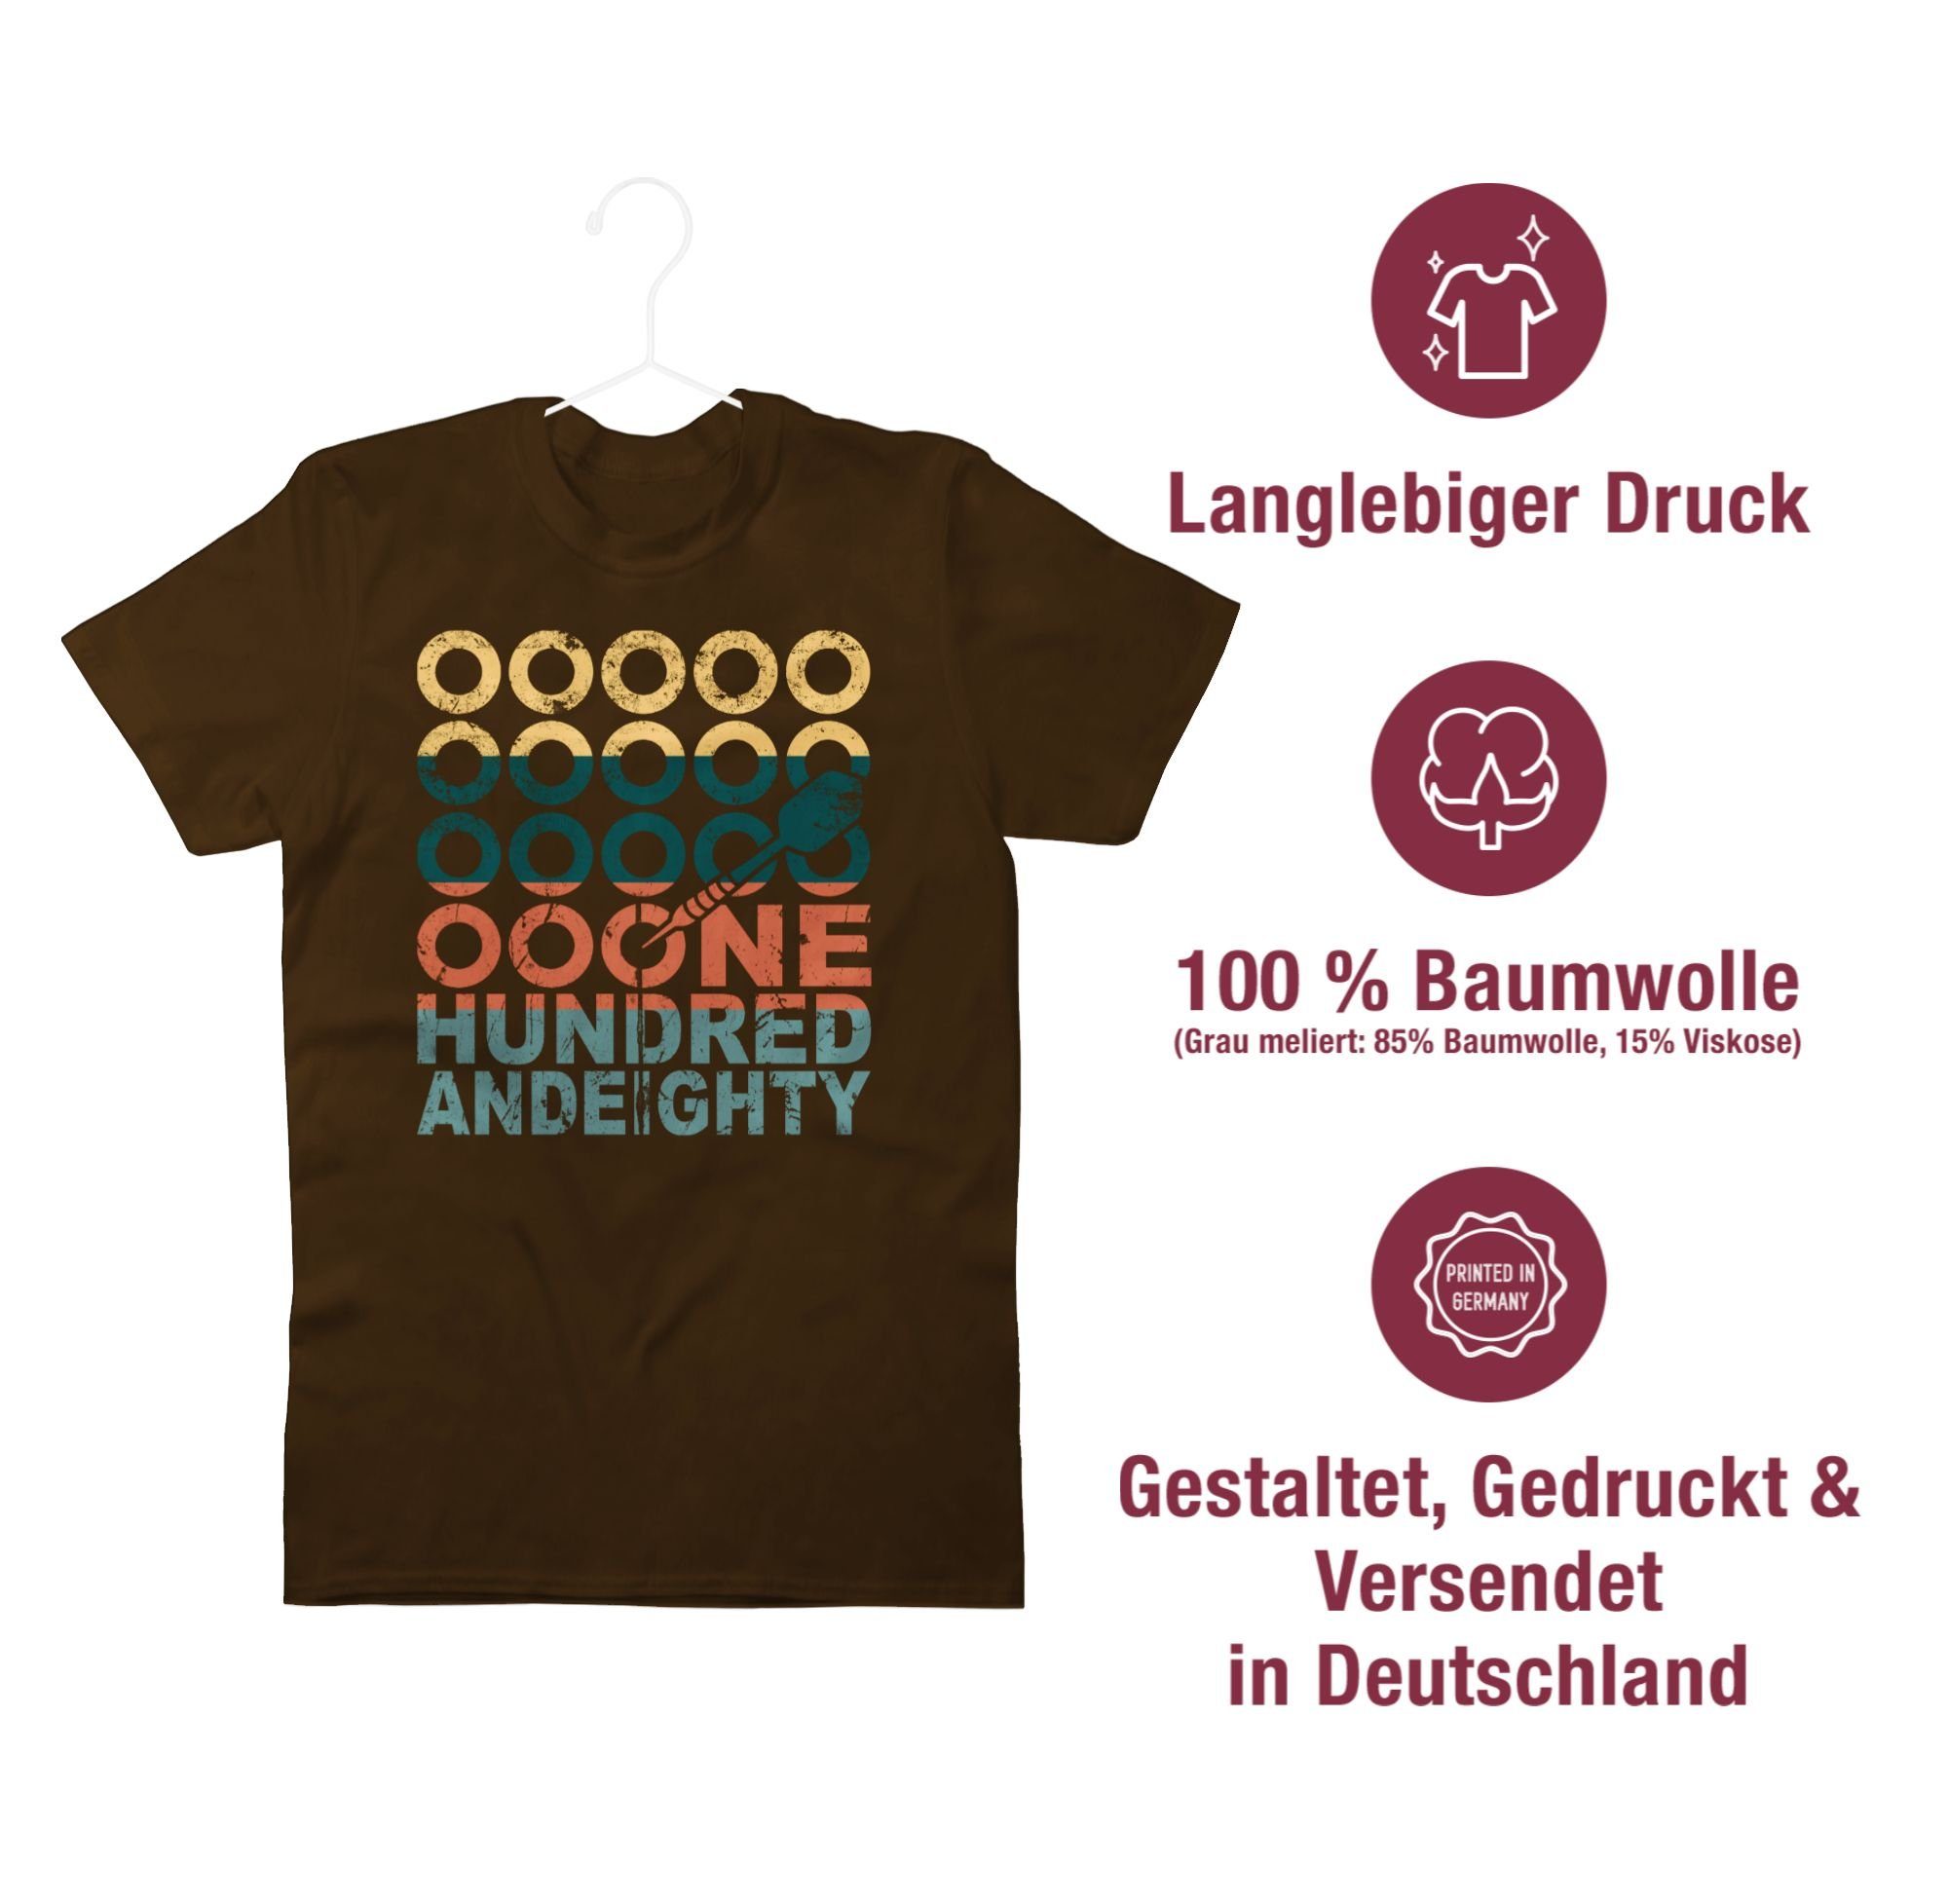 Sport T-Shirt Braun bunt and One Hundred 03 Eighty - Shirtracer Zubehör